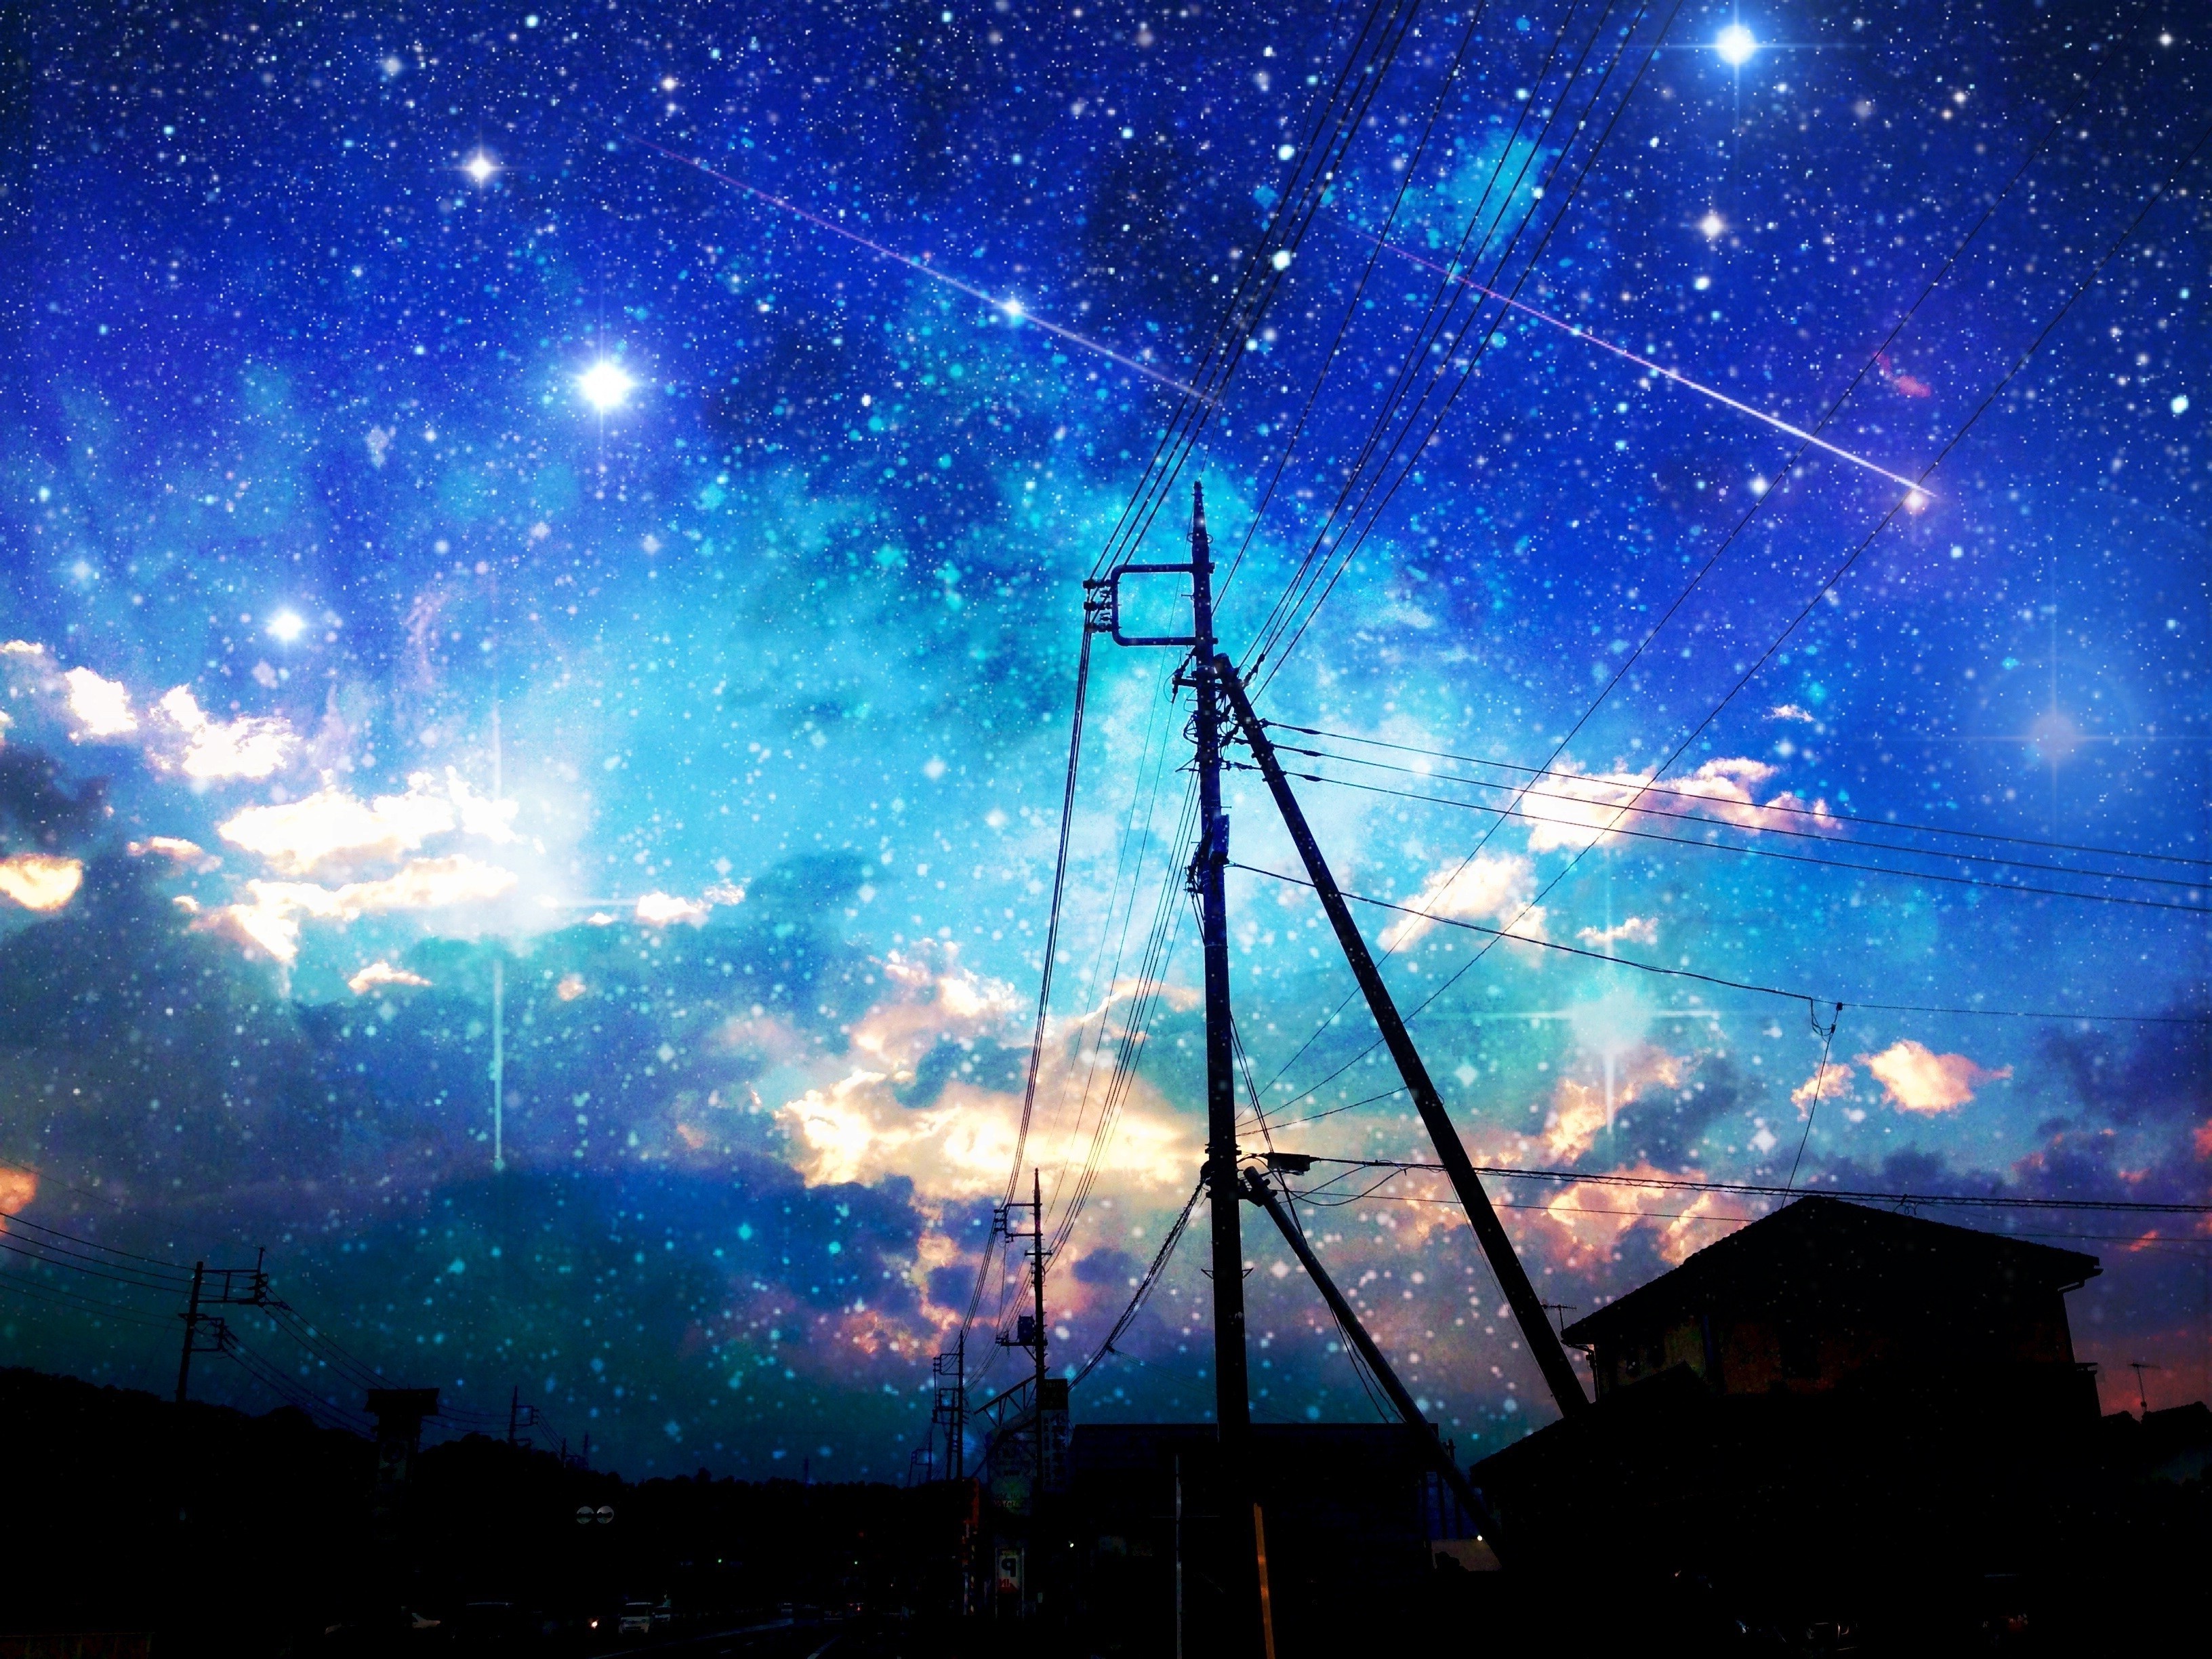 nacht anime wallpaper,himmel,atmosphäre,astronomisches objekt,astronomie,wissenschaft